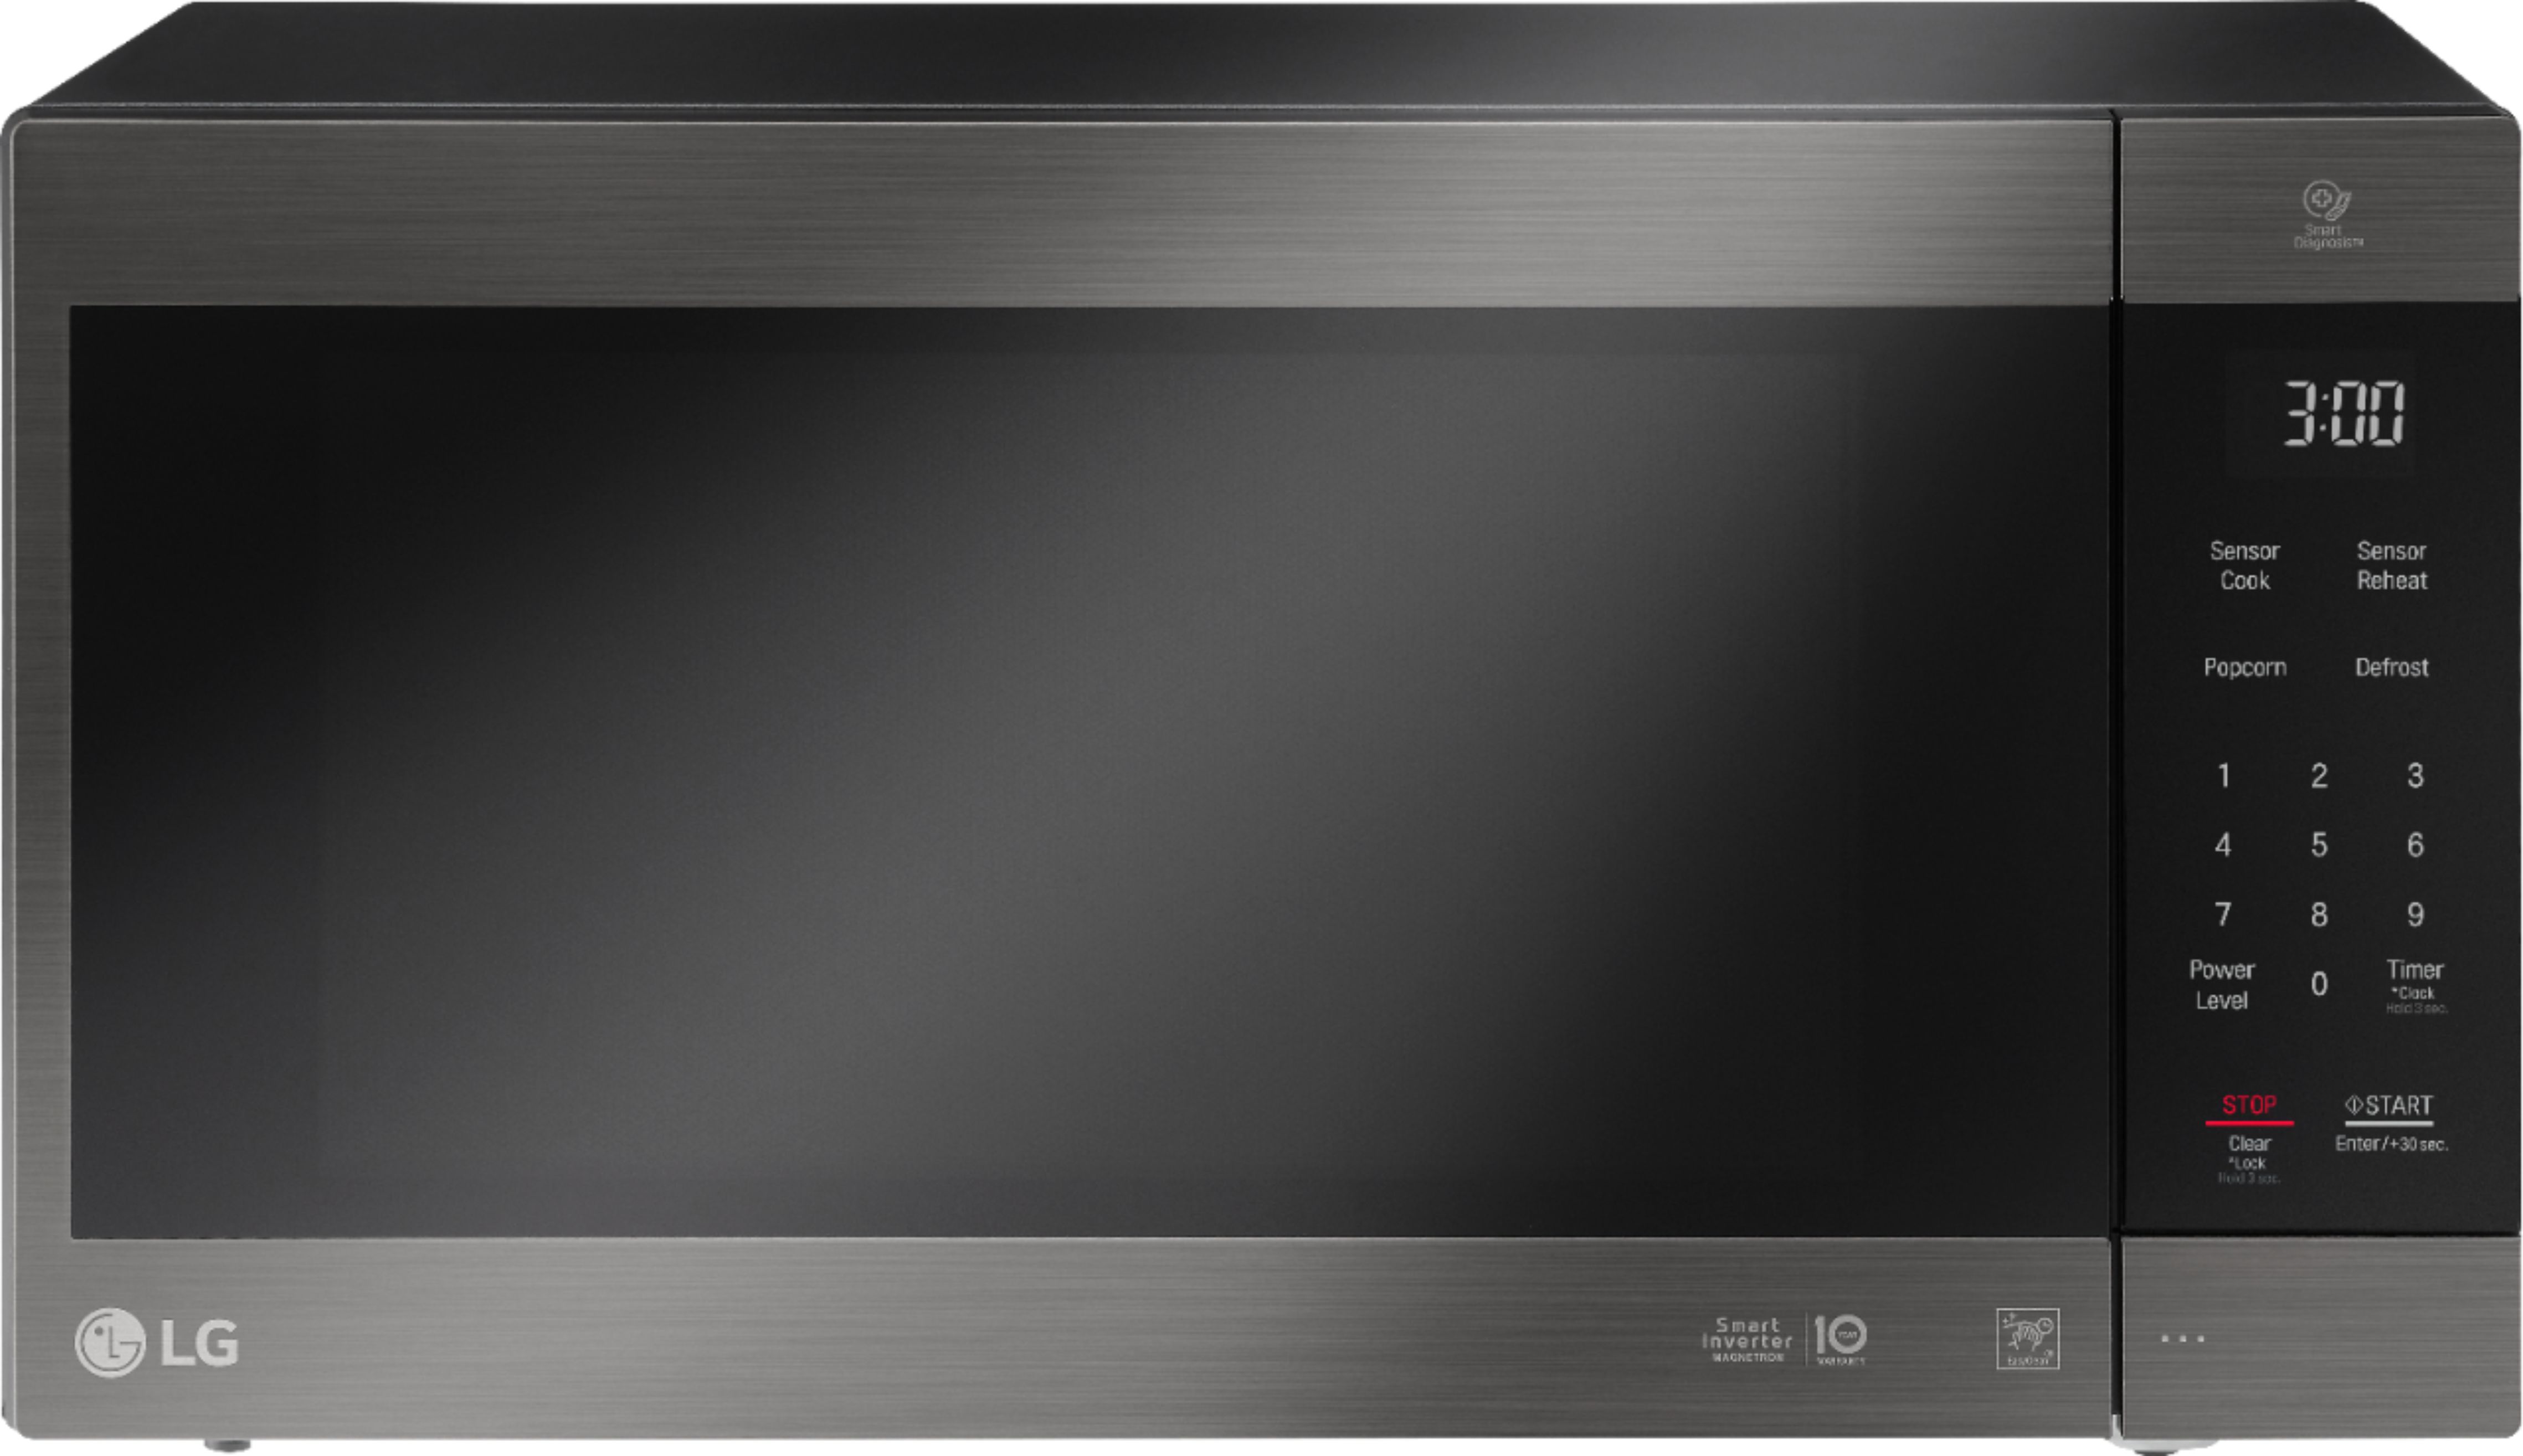 LG – 2.0 Cu. Ft. Family-Size Microwave – PrintProof Black Stainless Steel